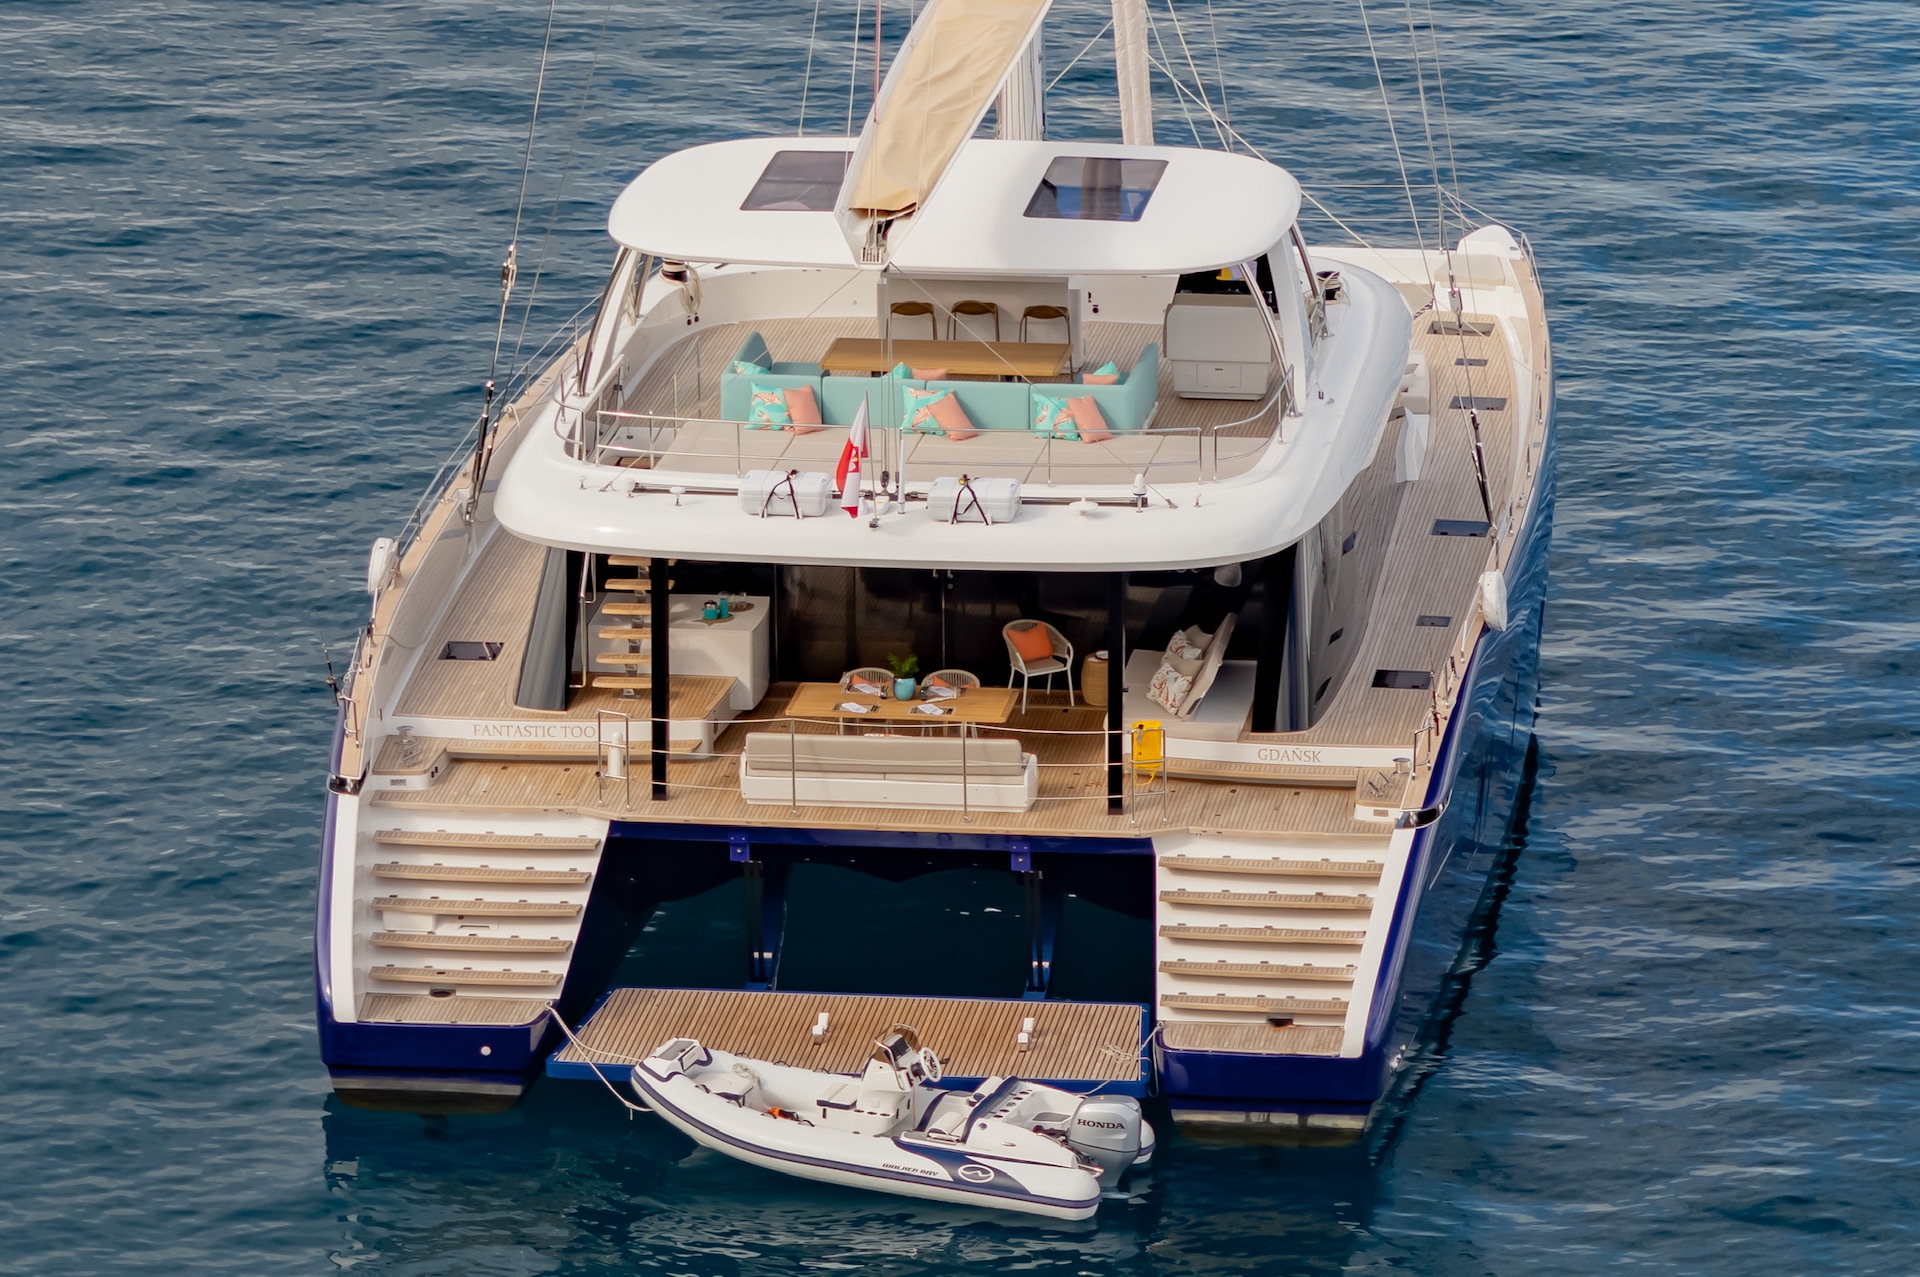 catamaran yacht charter Fantastic Too